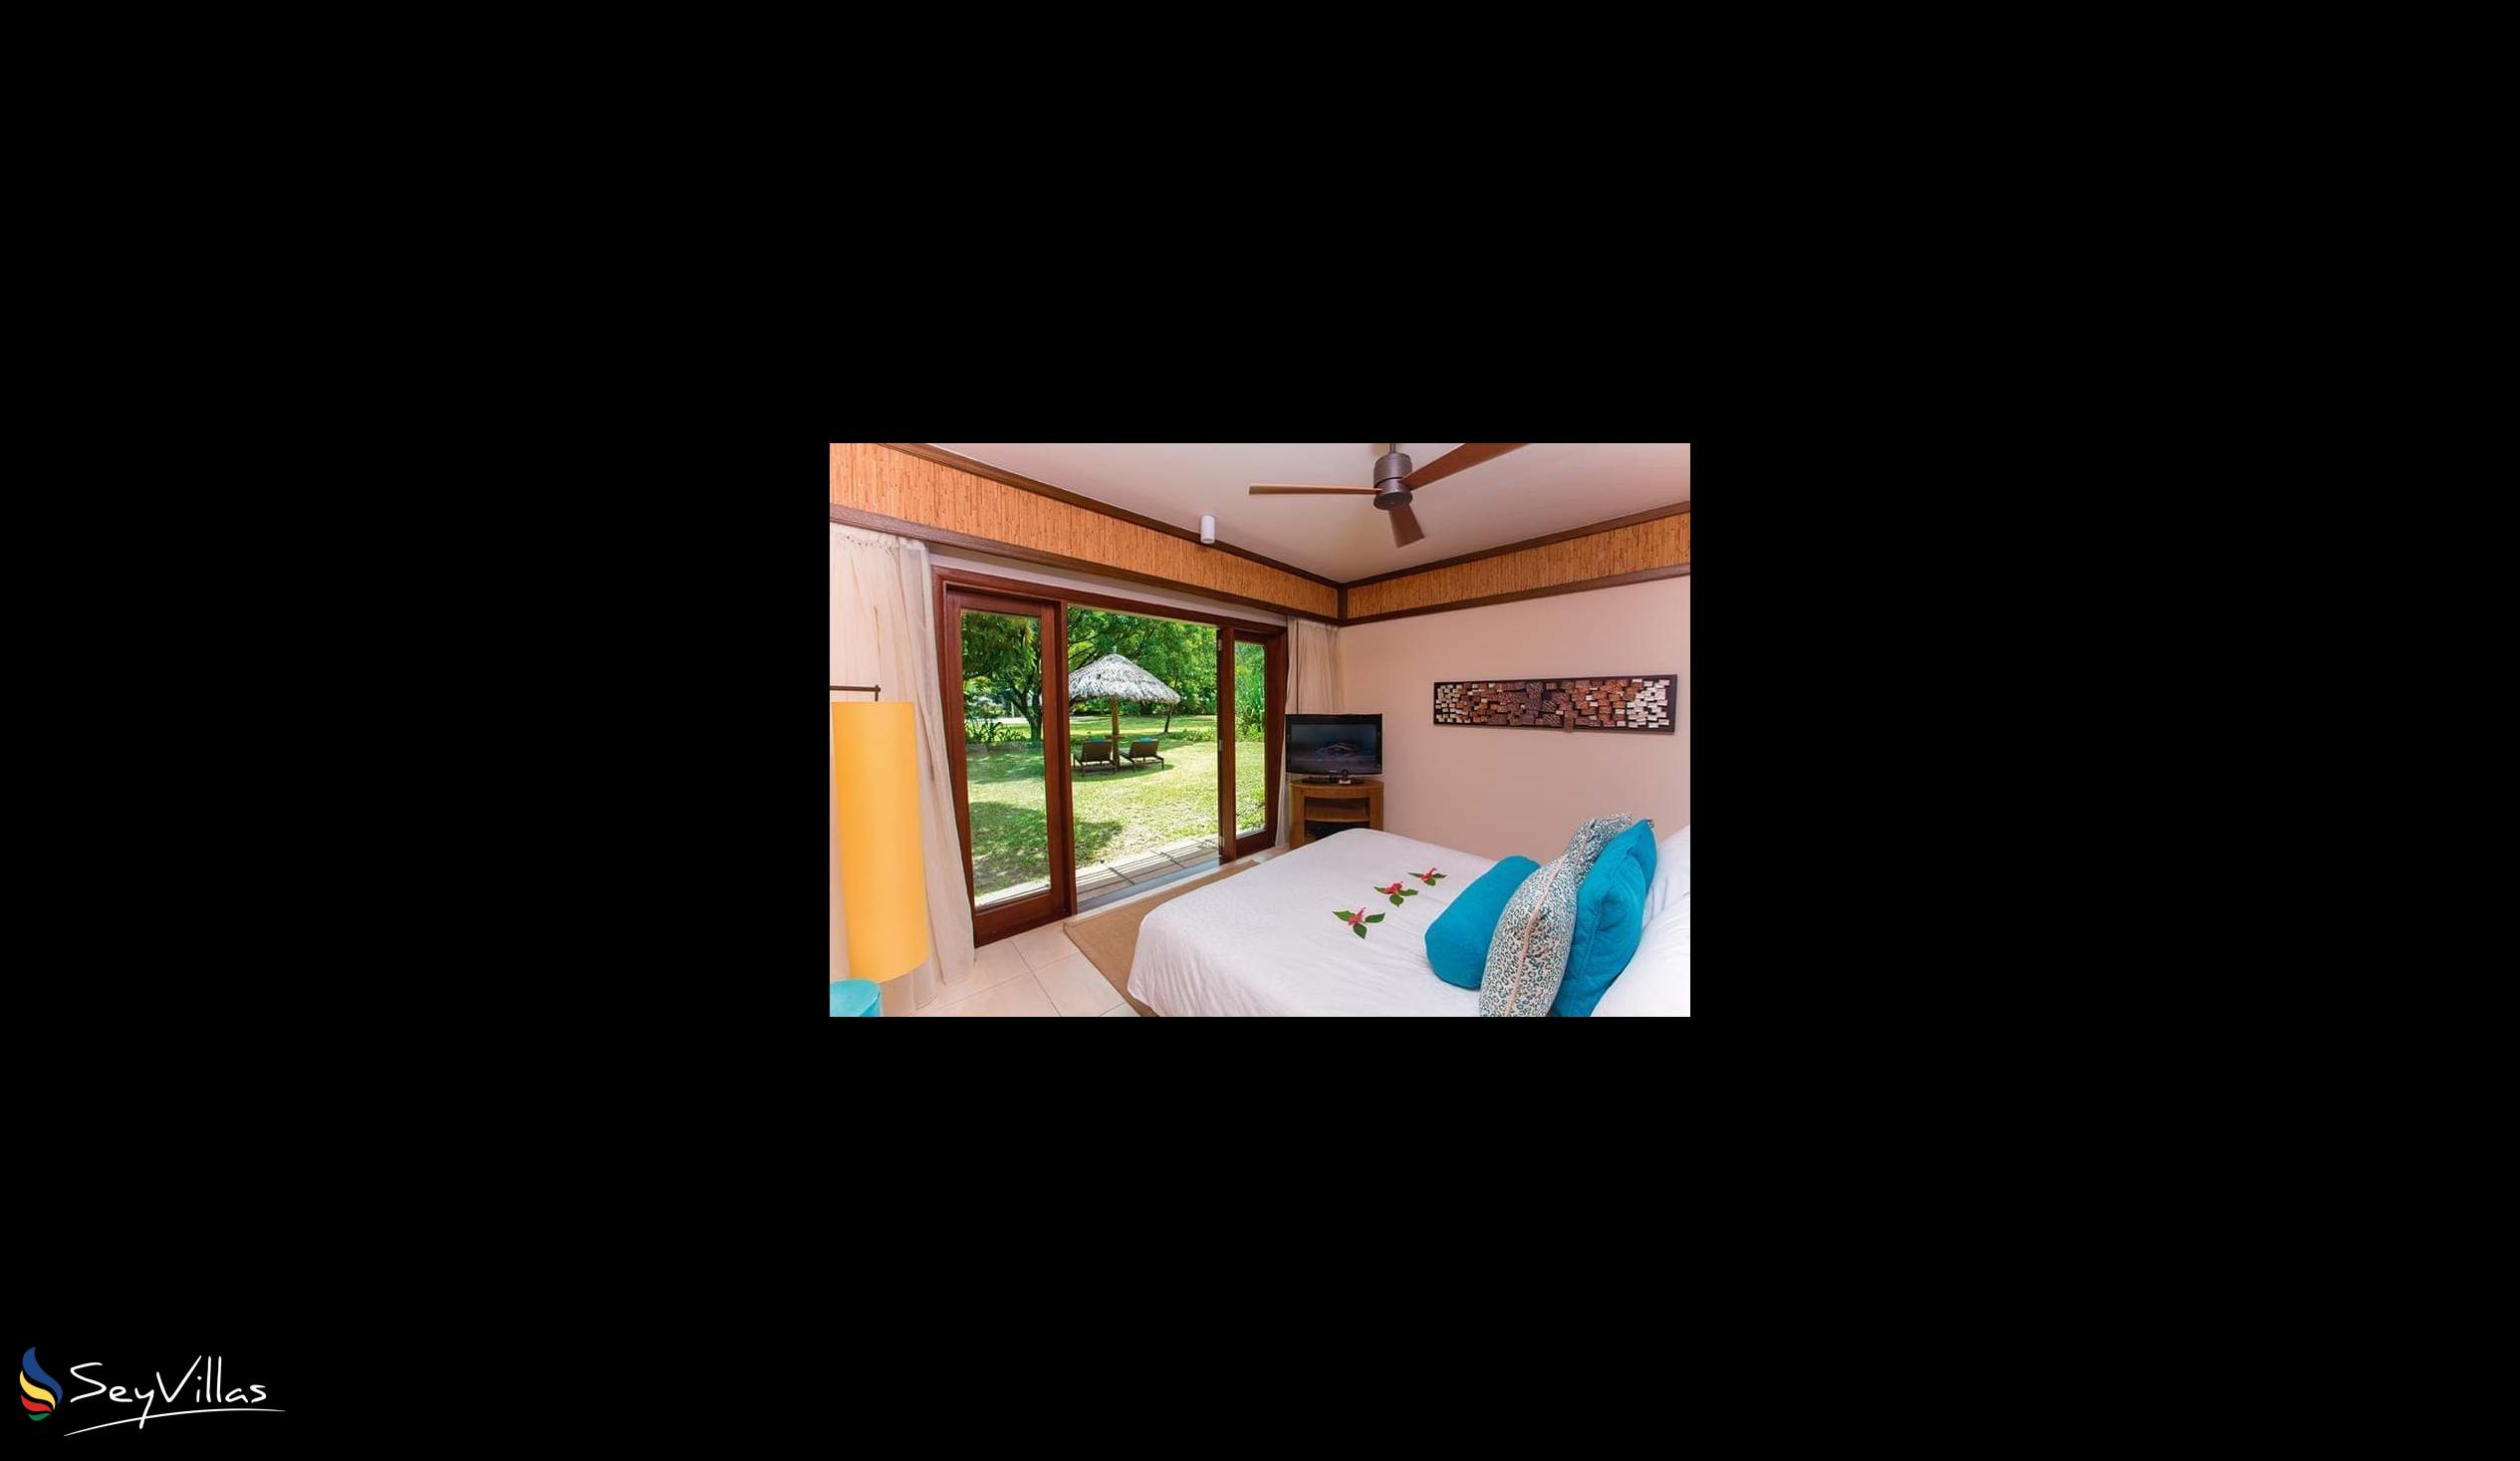 Photo 92: Constance Ephelia Seychelles - 1-Bedroom Beach Villa - Mahé (Seychelles)